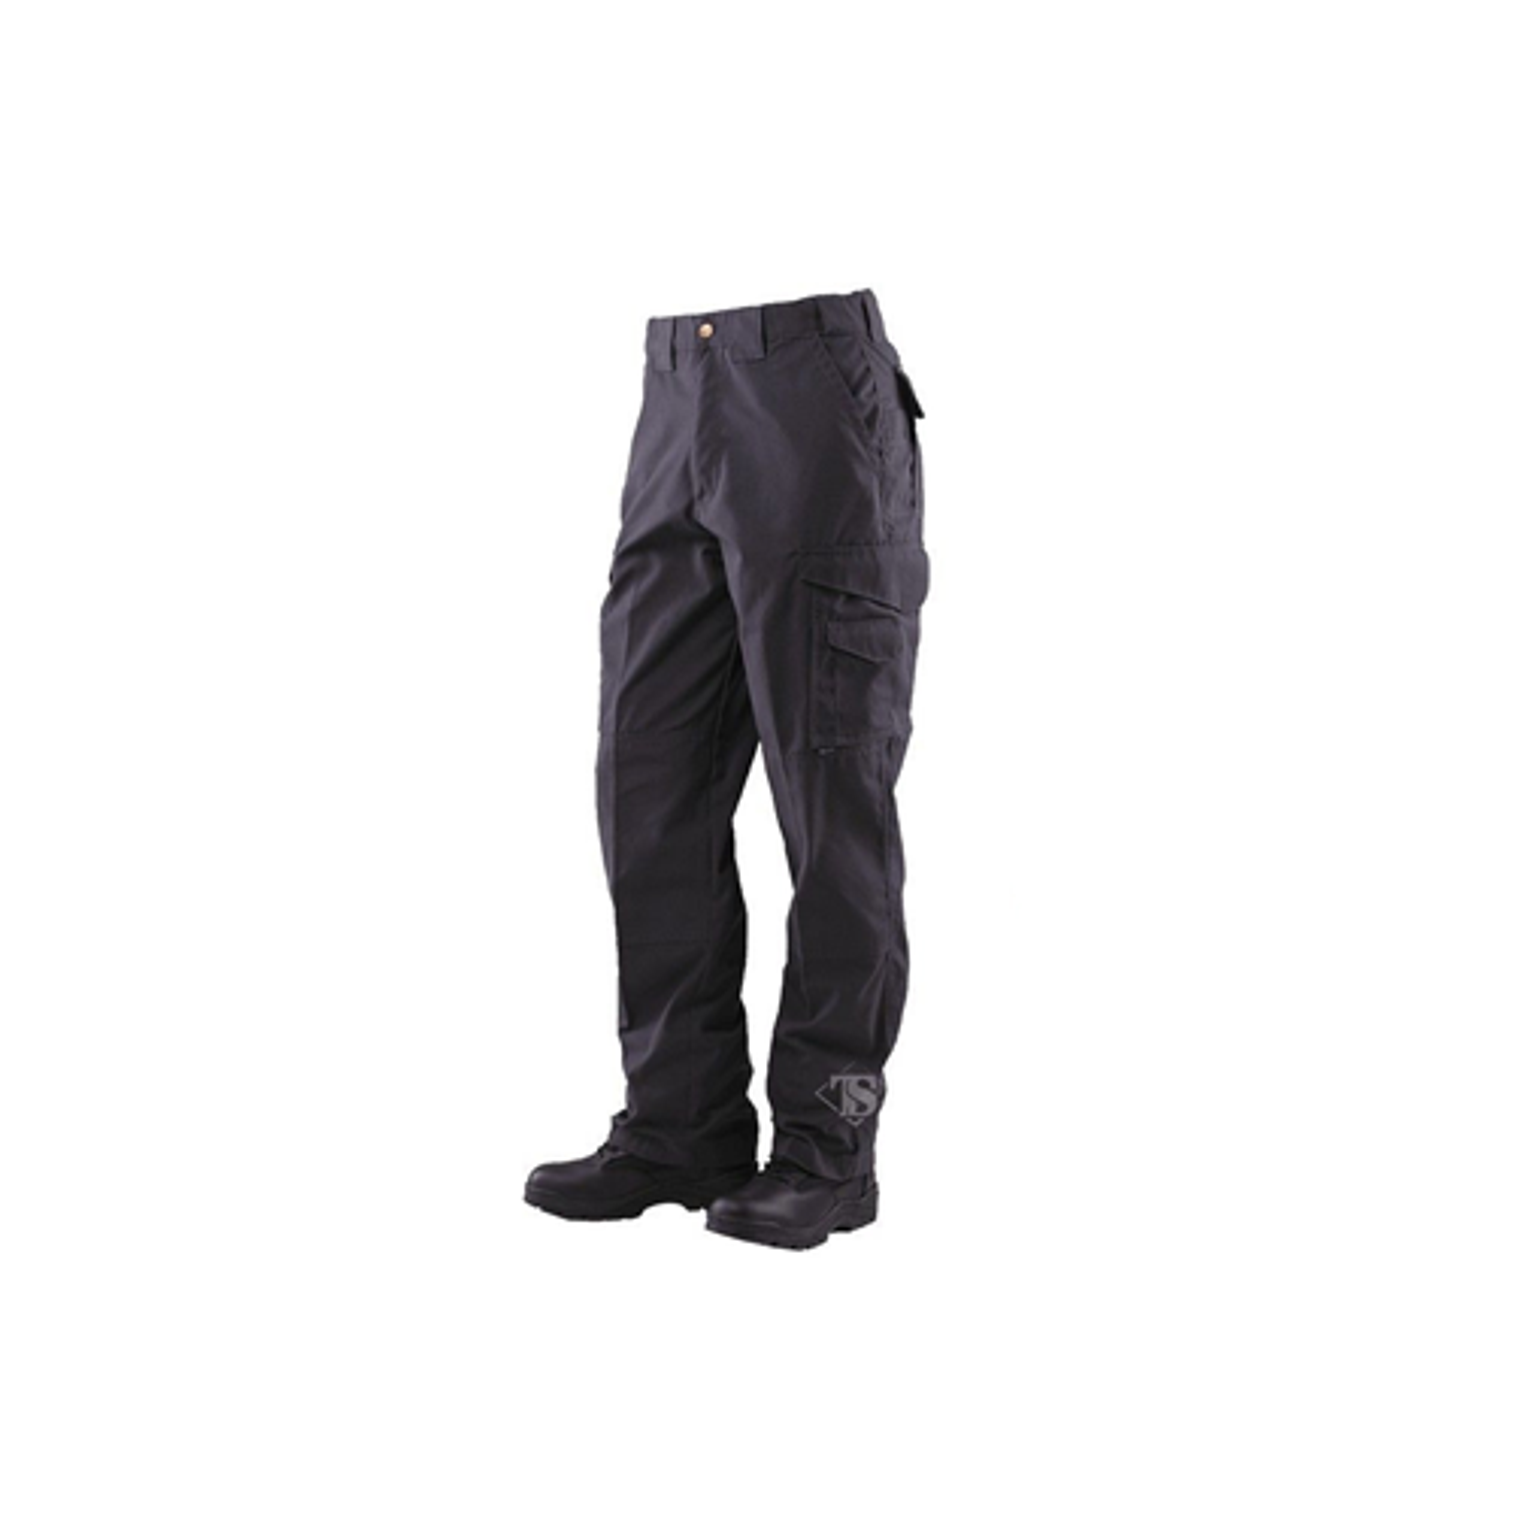 24-7 Original Tactical Pants - 6.5oz - Black - KRTSP-1062025